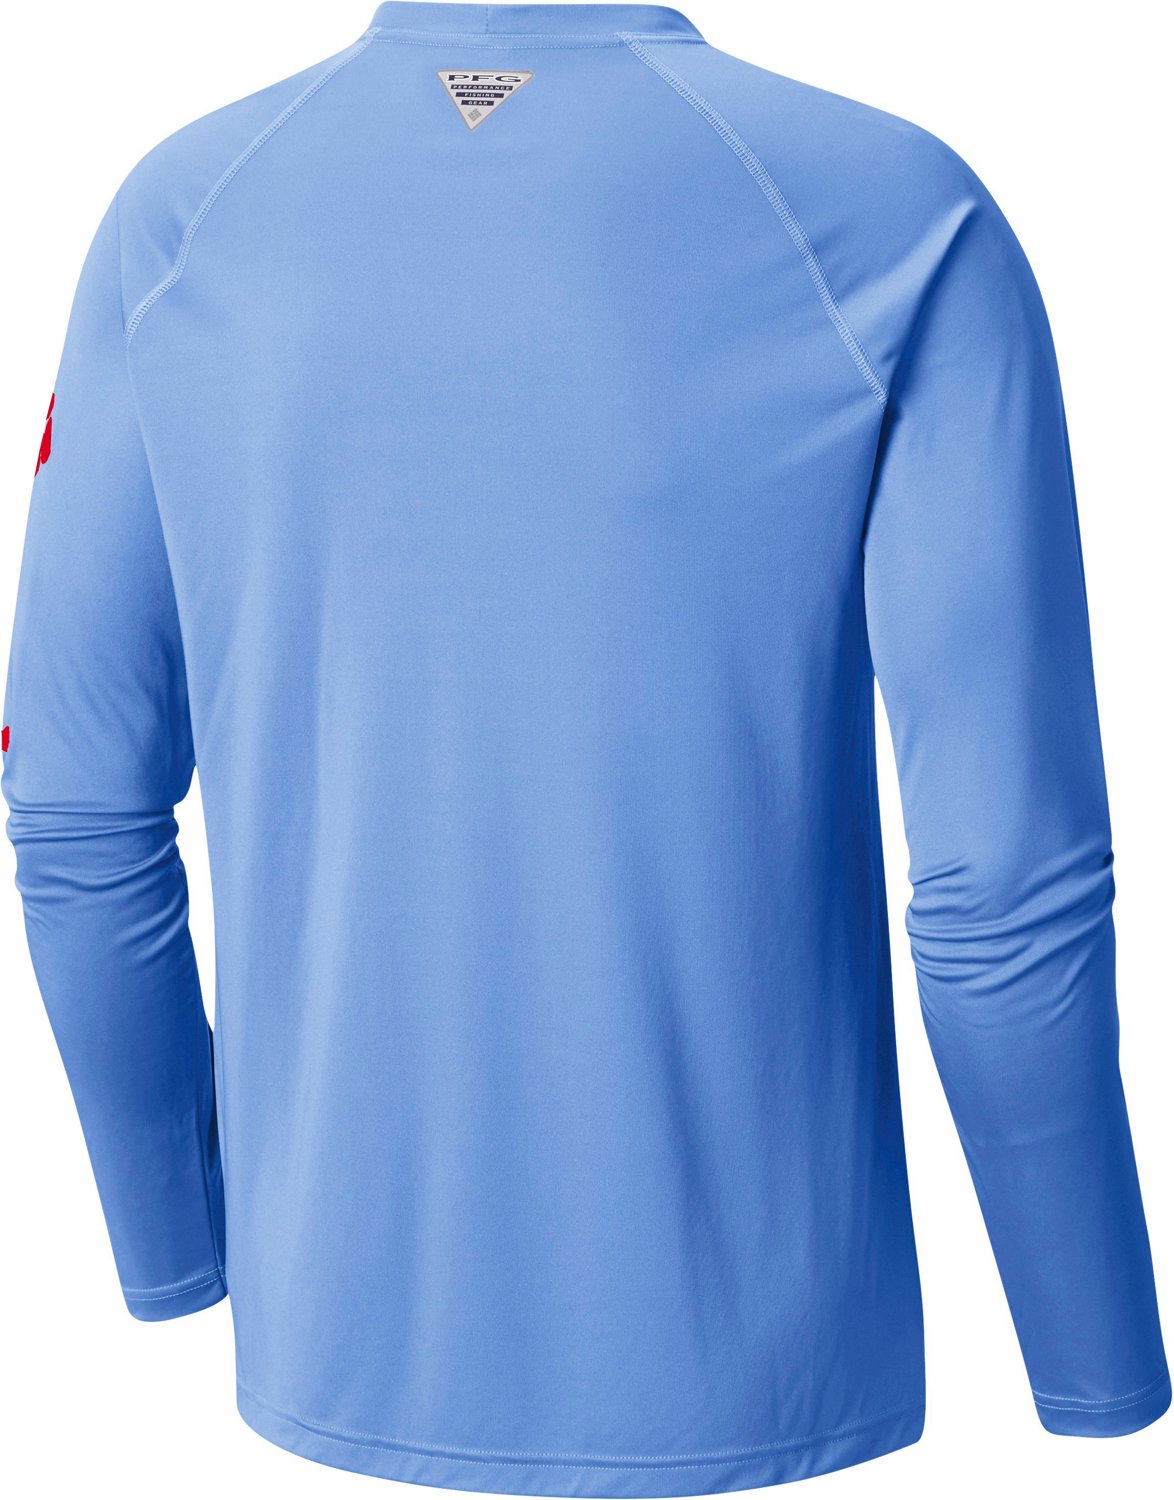 Texas Rangers Columbia Sportswear, Rangers Columbia PFG Shirts, Polos